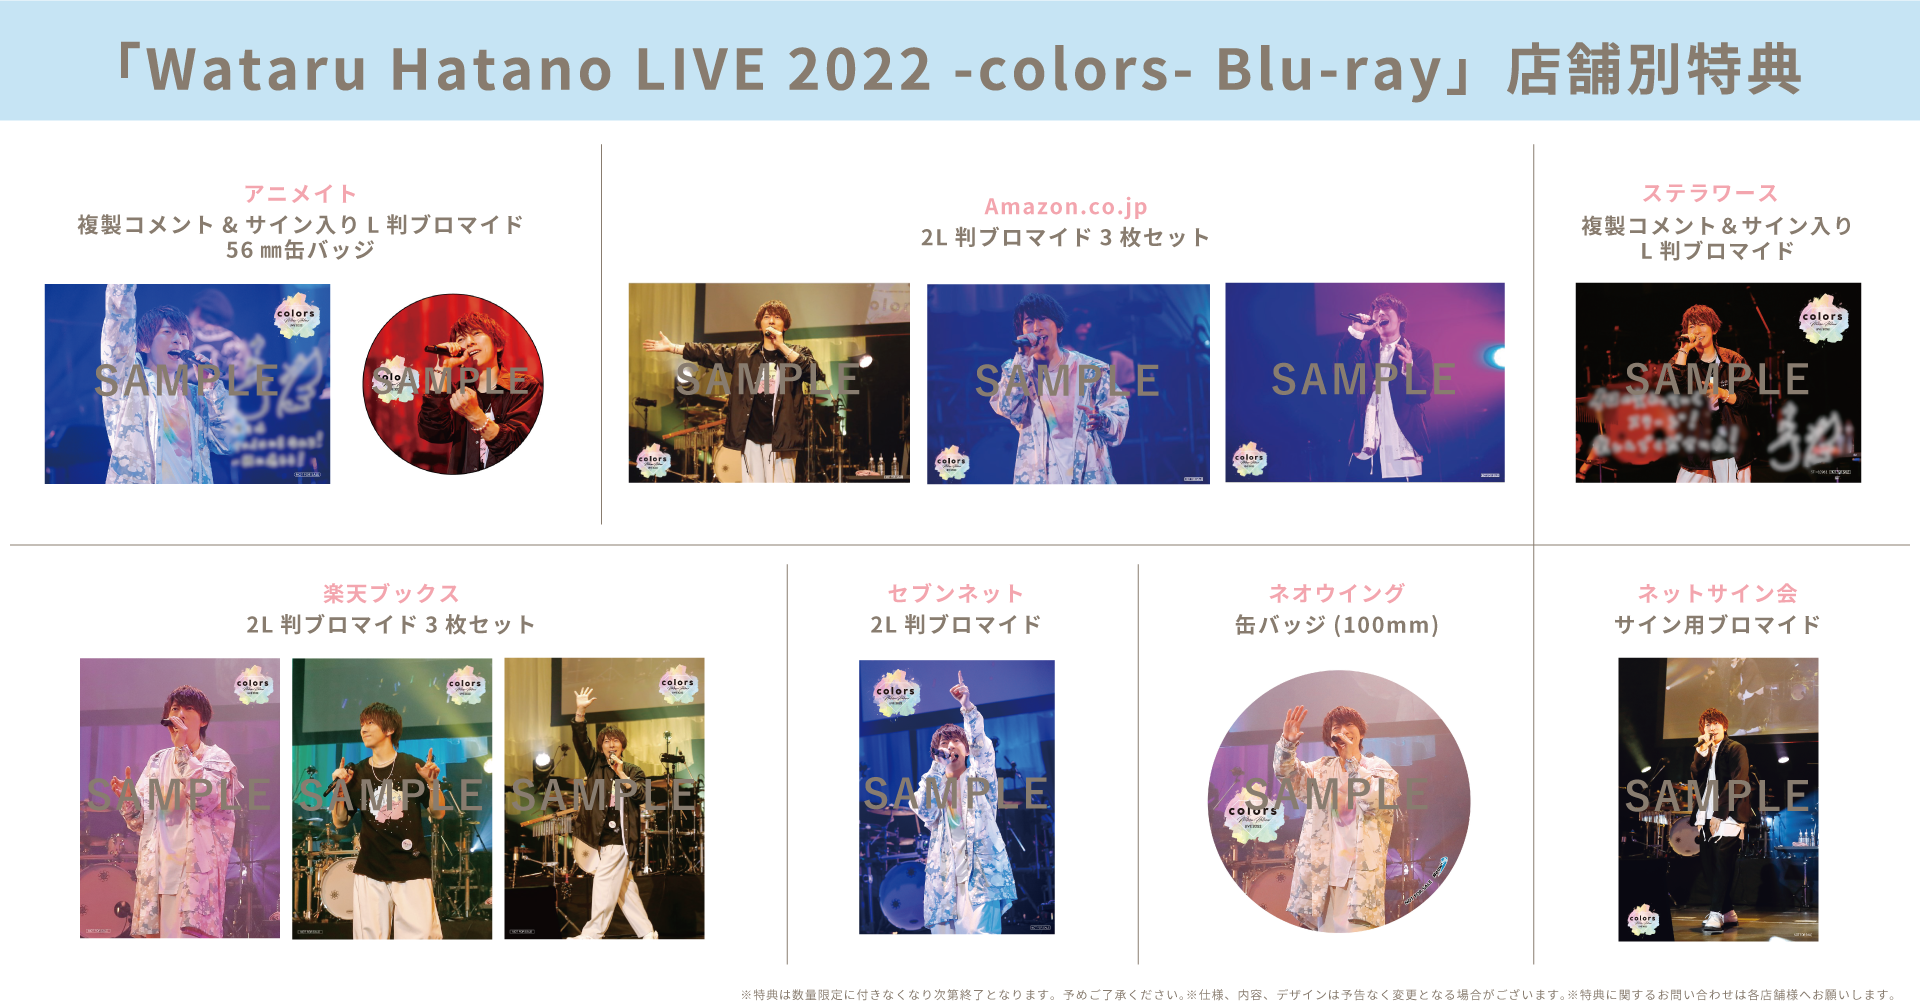 Wataru Hatano LIVE 2022 -colors- Blu-ray - DISCOGRAPHY | 羽多野渉 